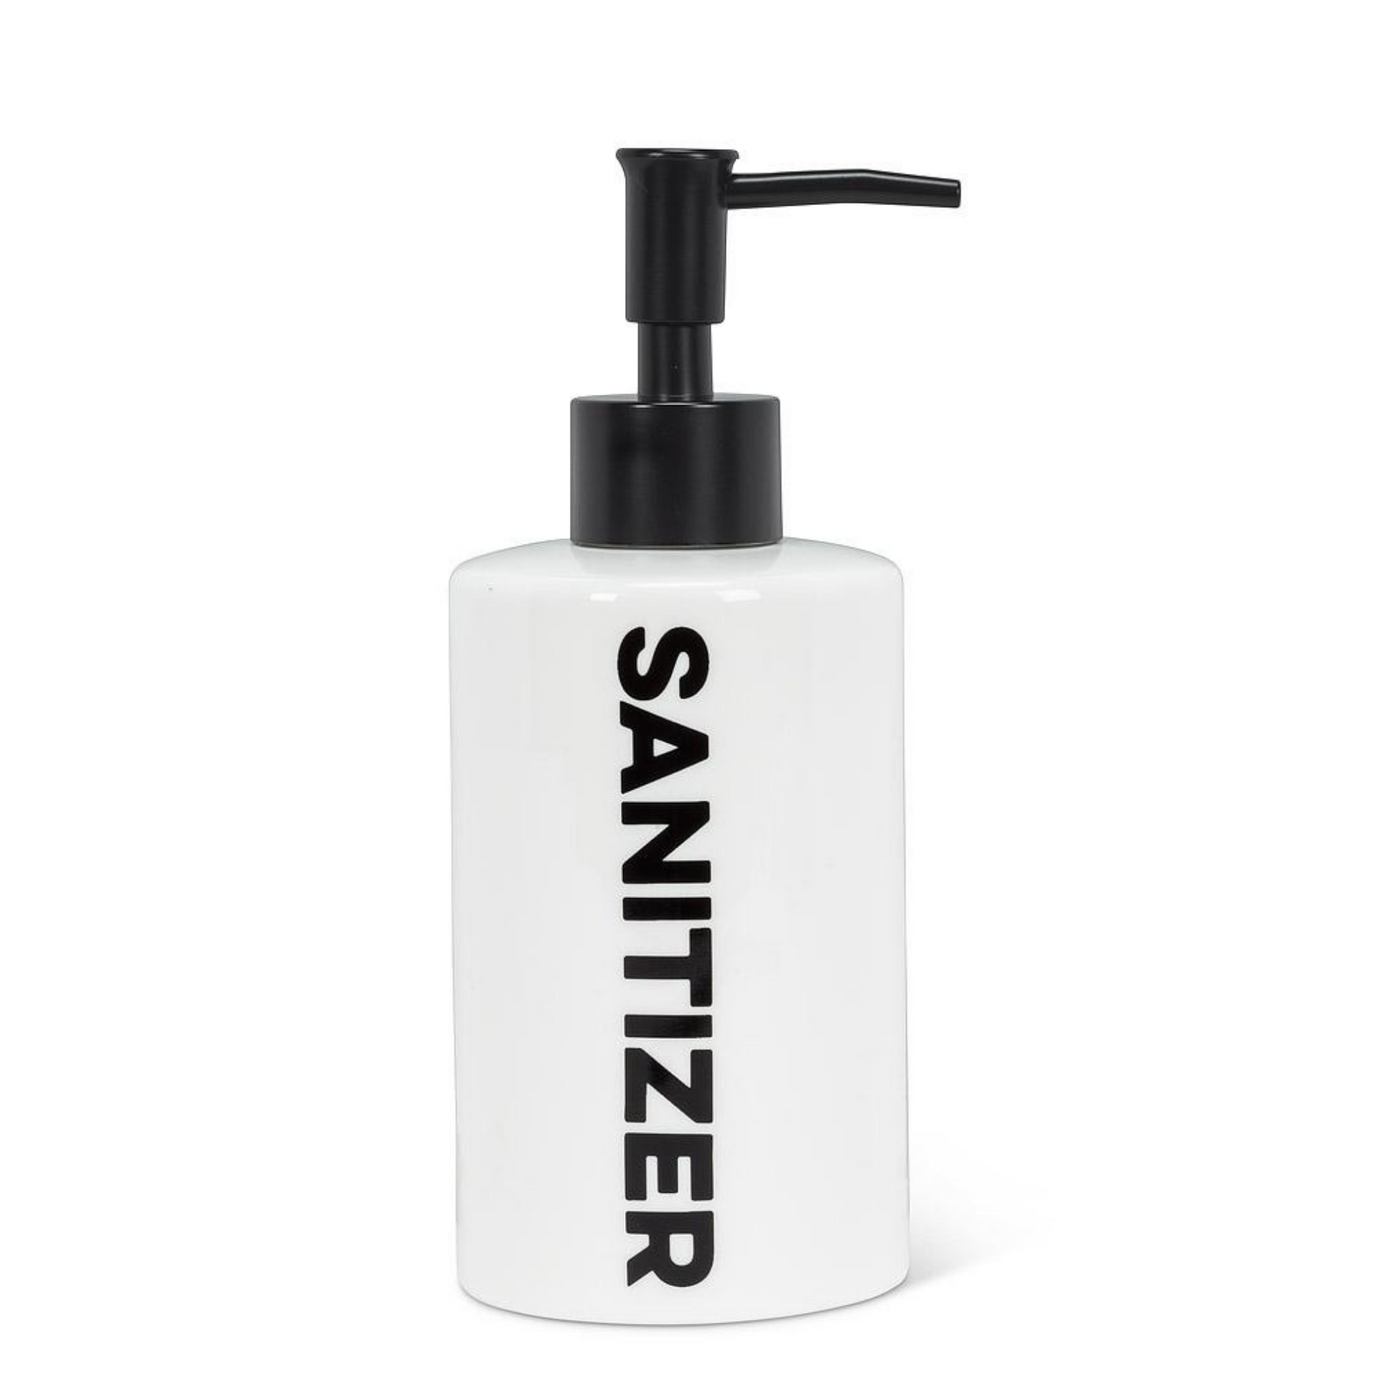 Sanitizer pump